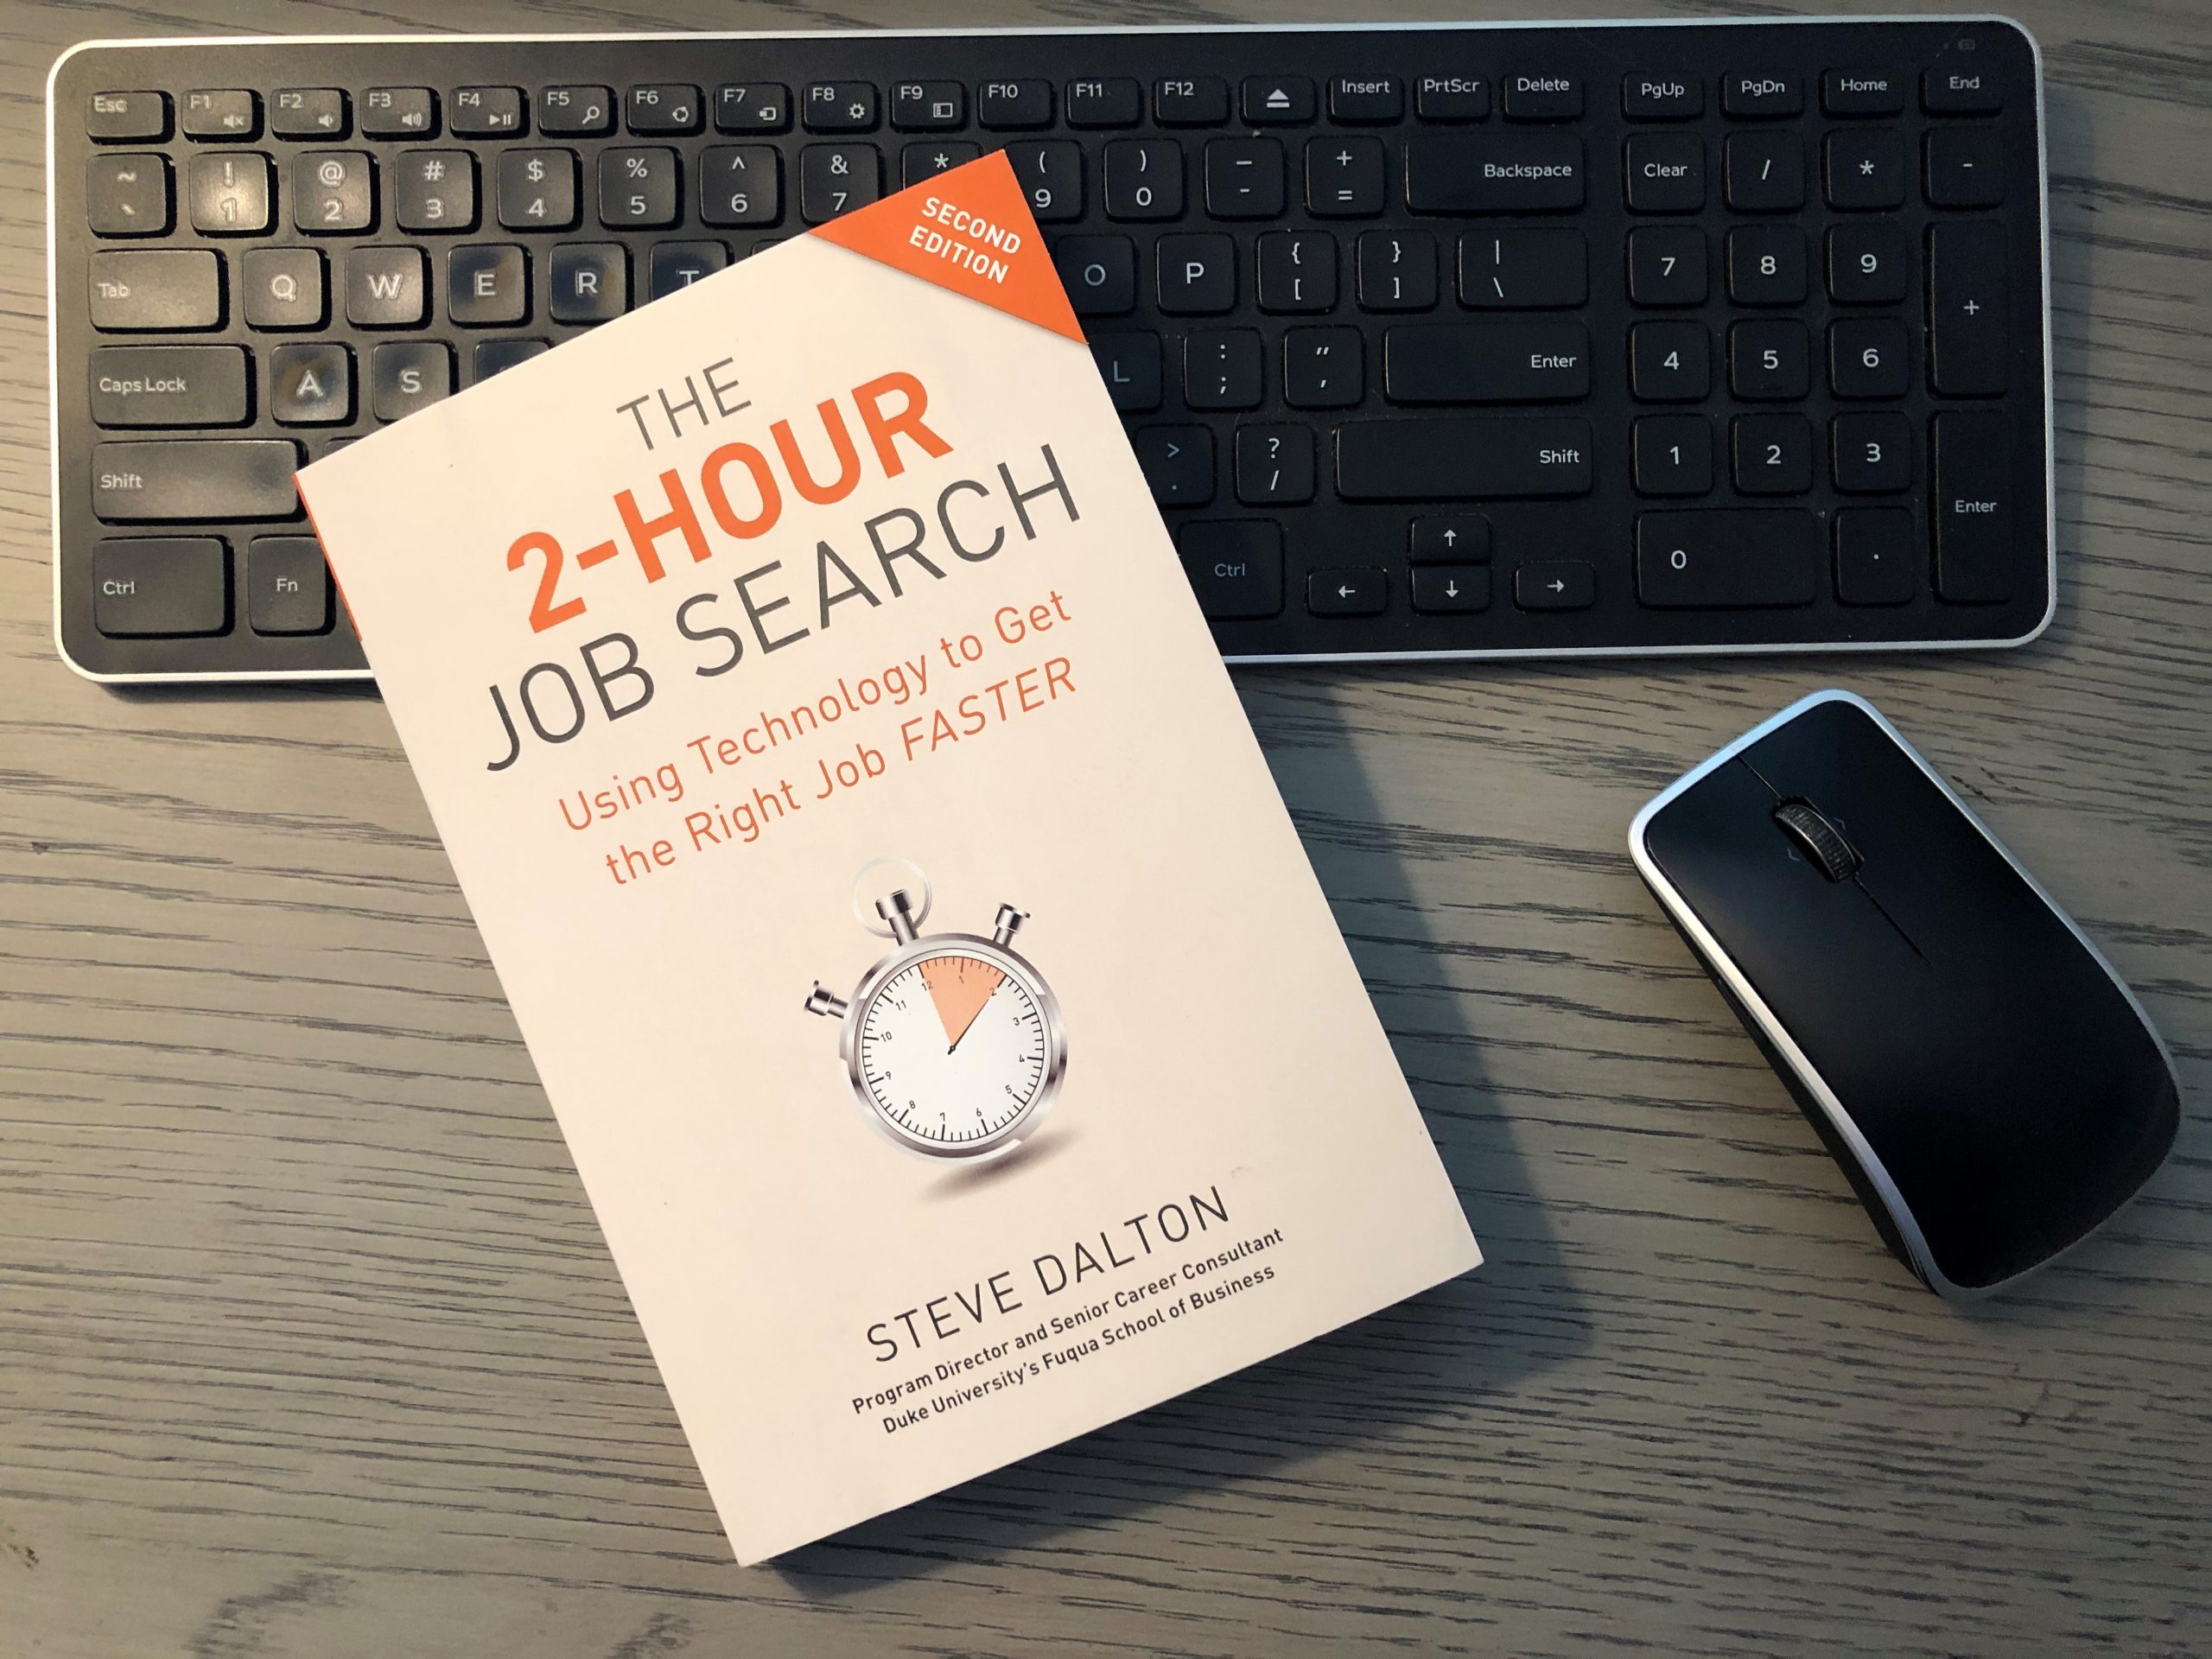 2 Hour Job Search  Book by Steve Dalton 